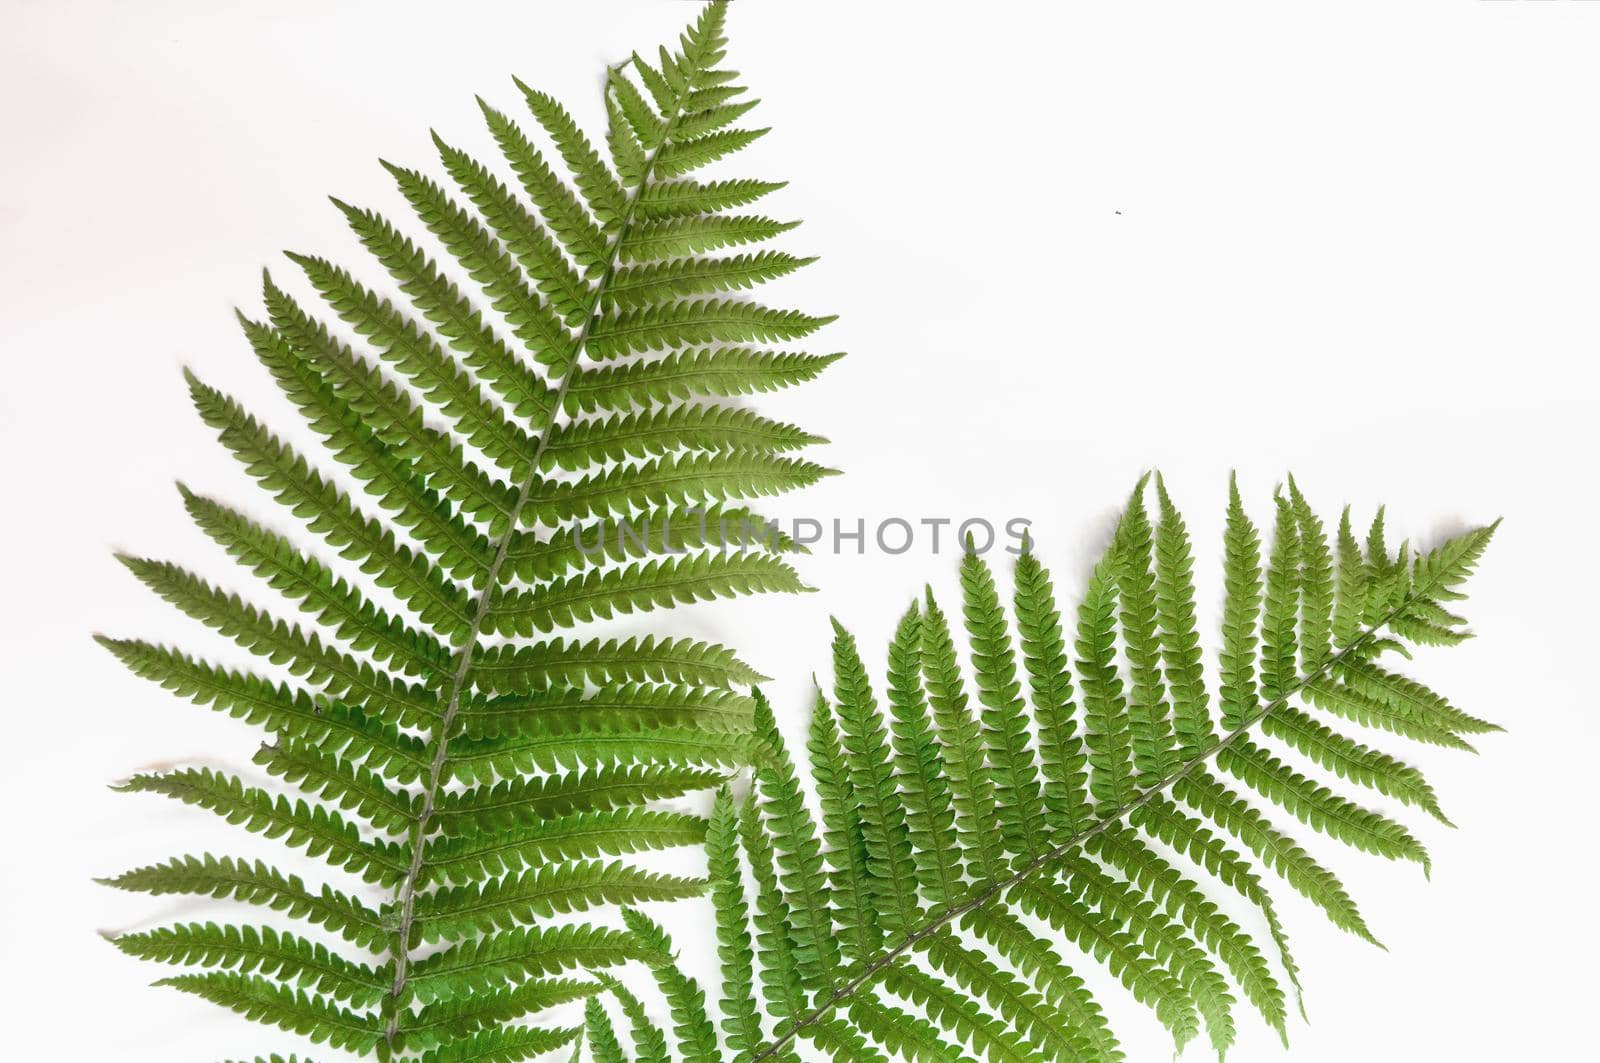 minimalism style, fern leaf on paper background